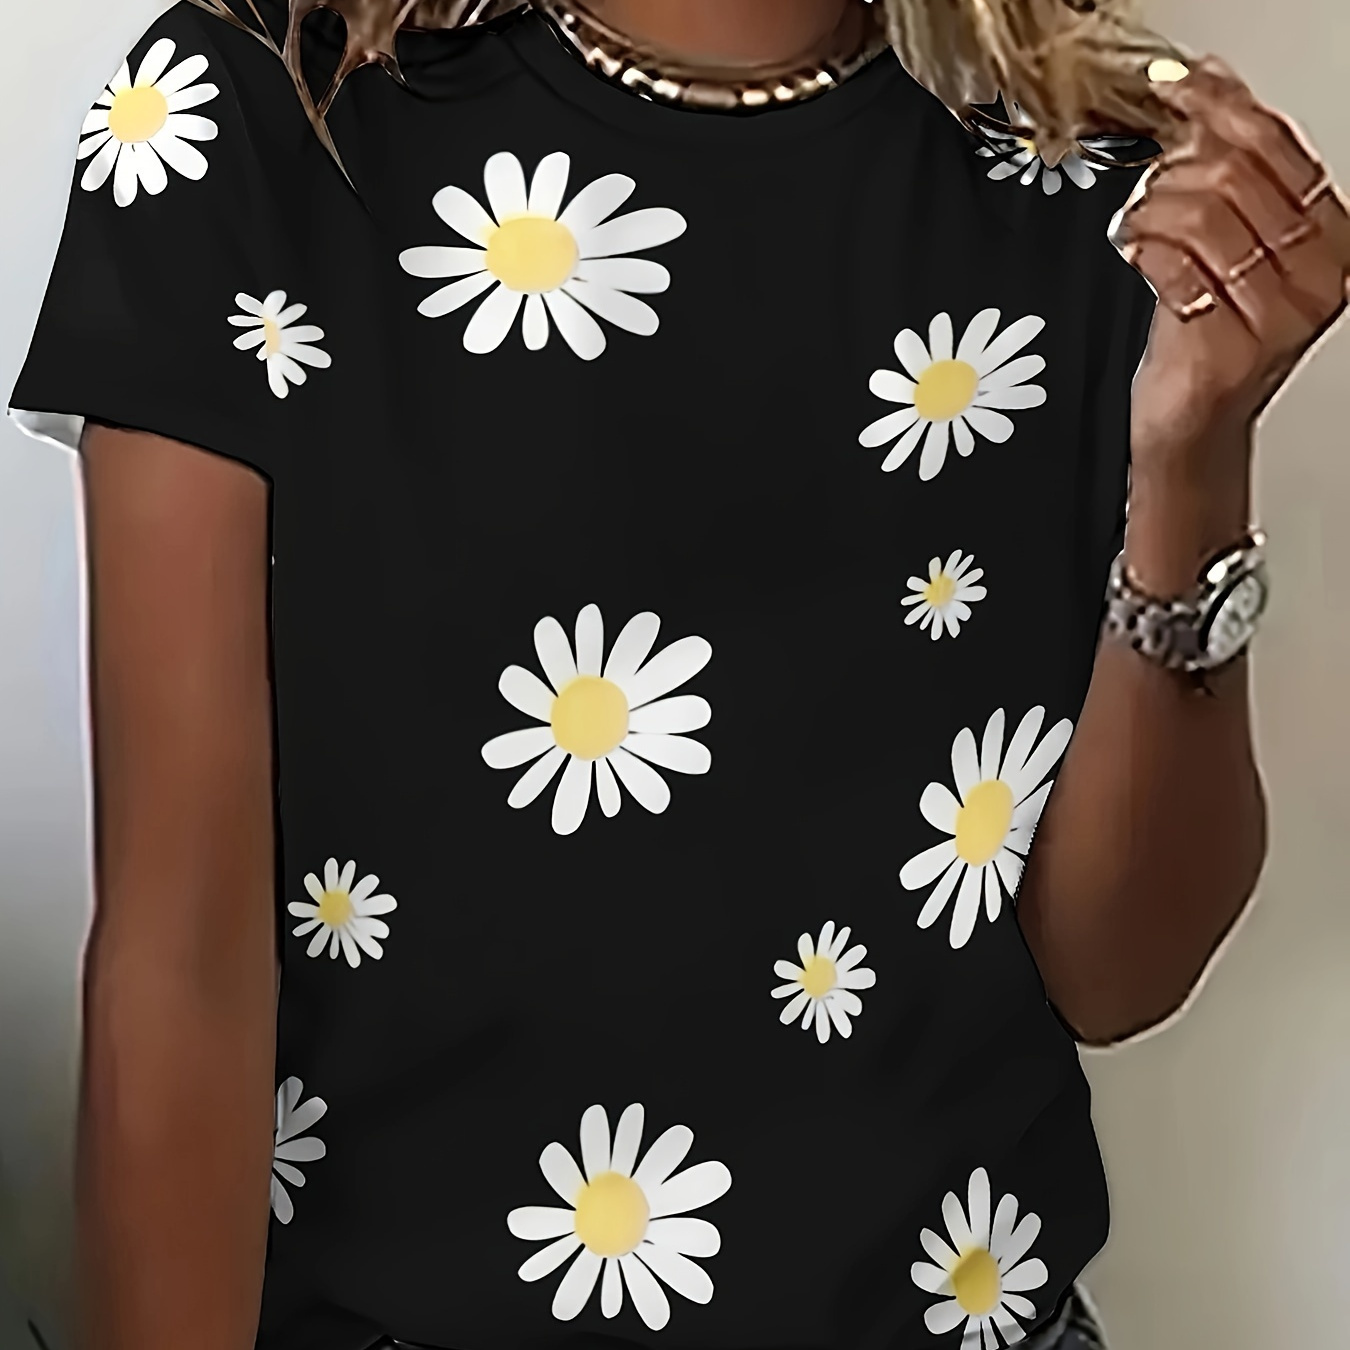 

Women's 3d Daisy Print T-shirt, Fashion Floral Graphic Tee, Short Sleeve, Casual Top, Fashion Design, Summer Wear